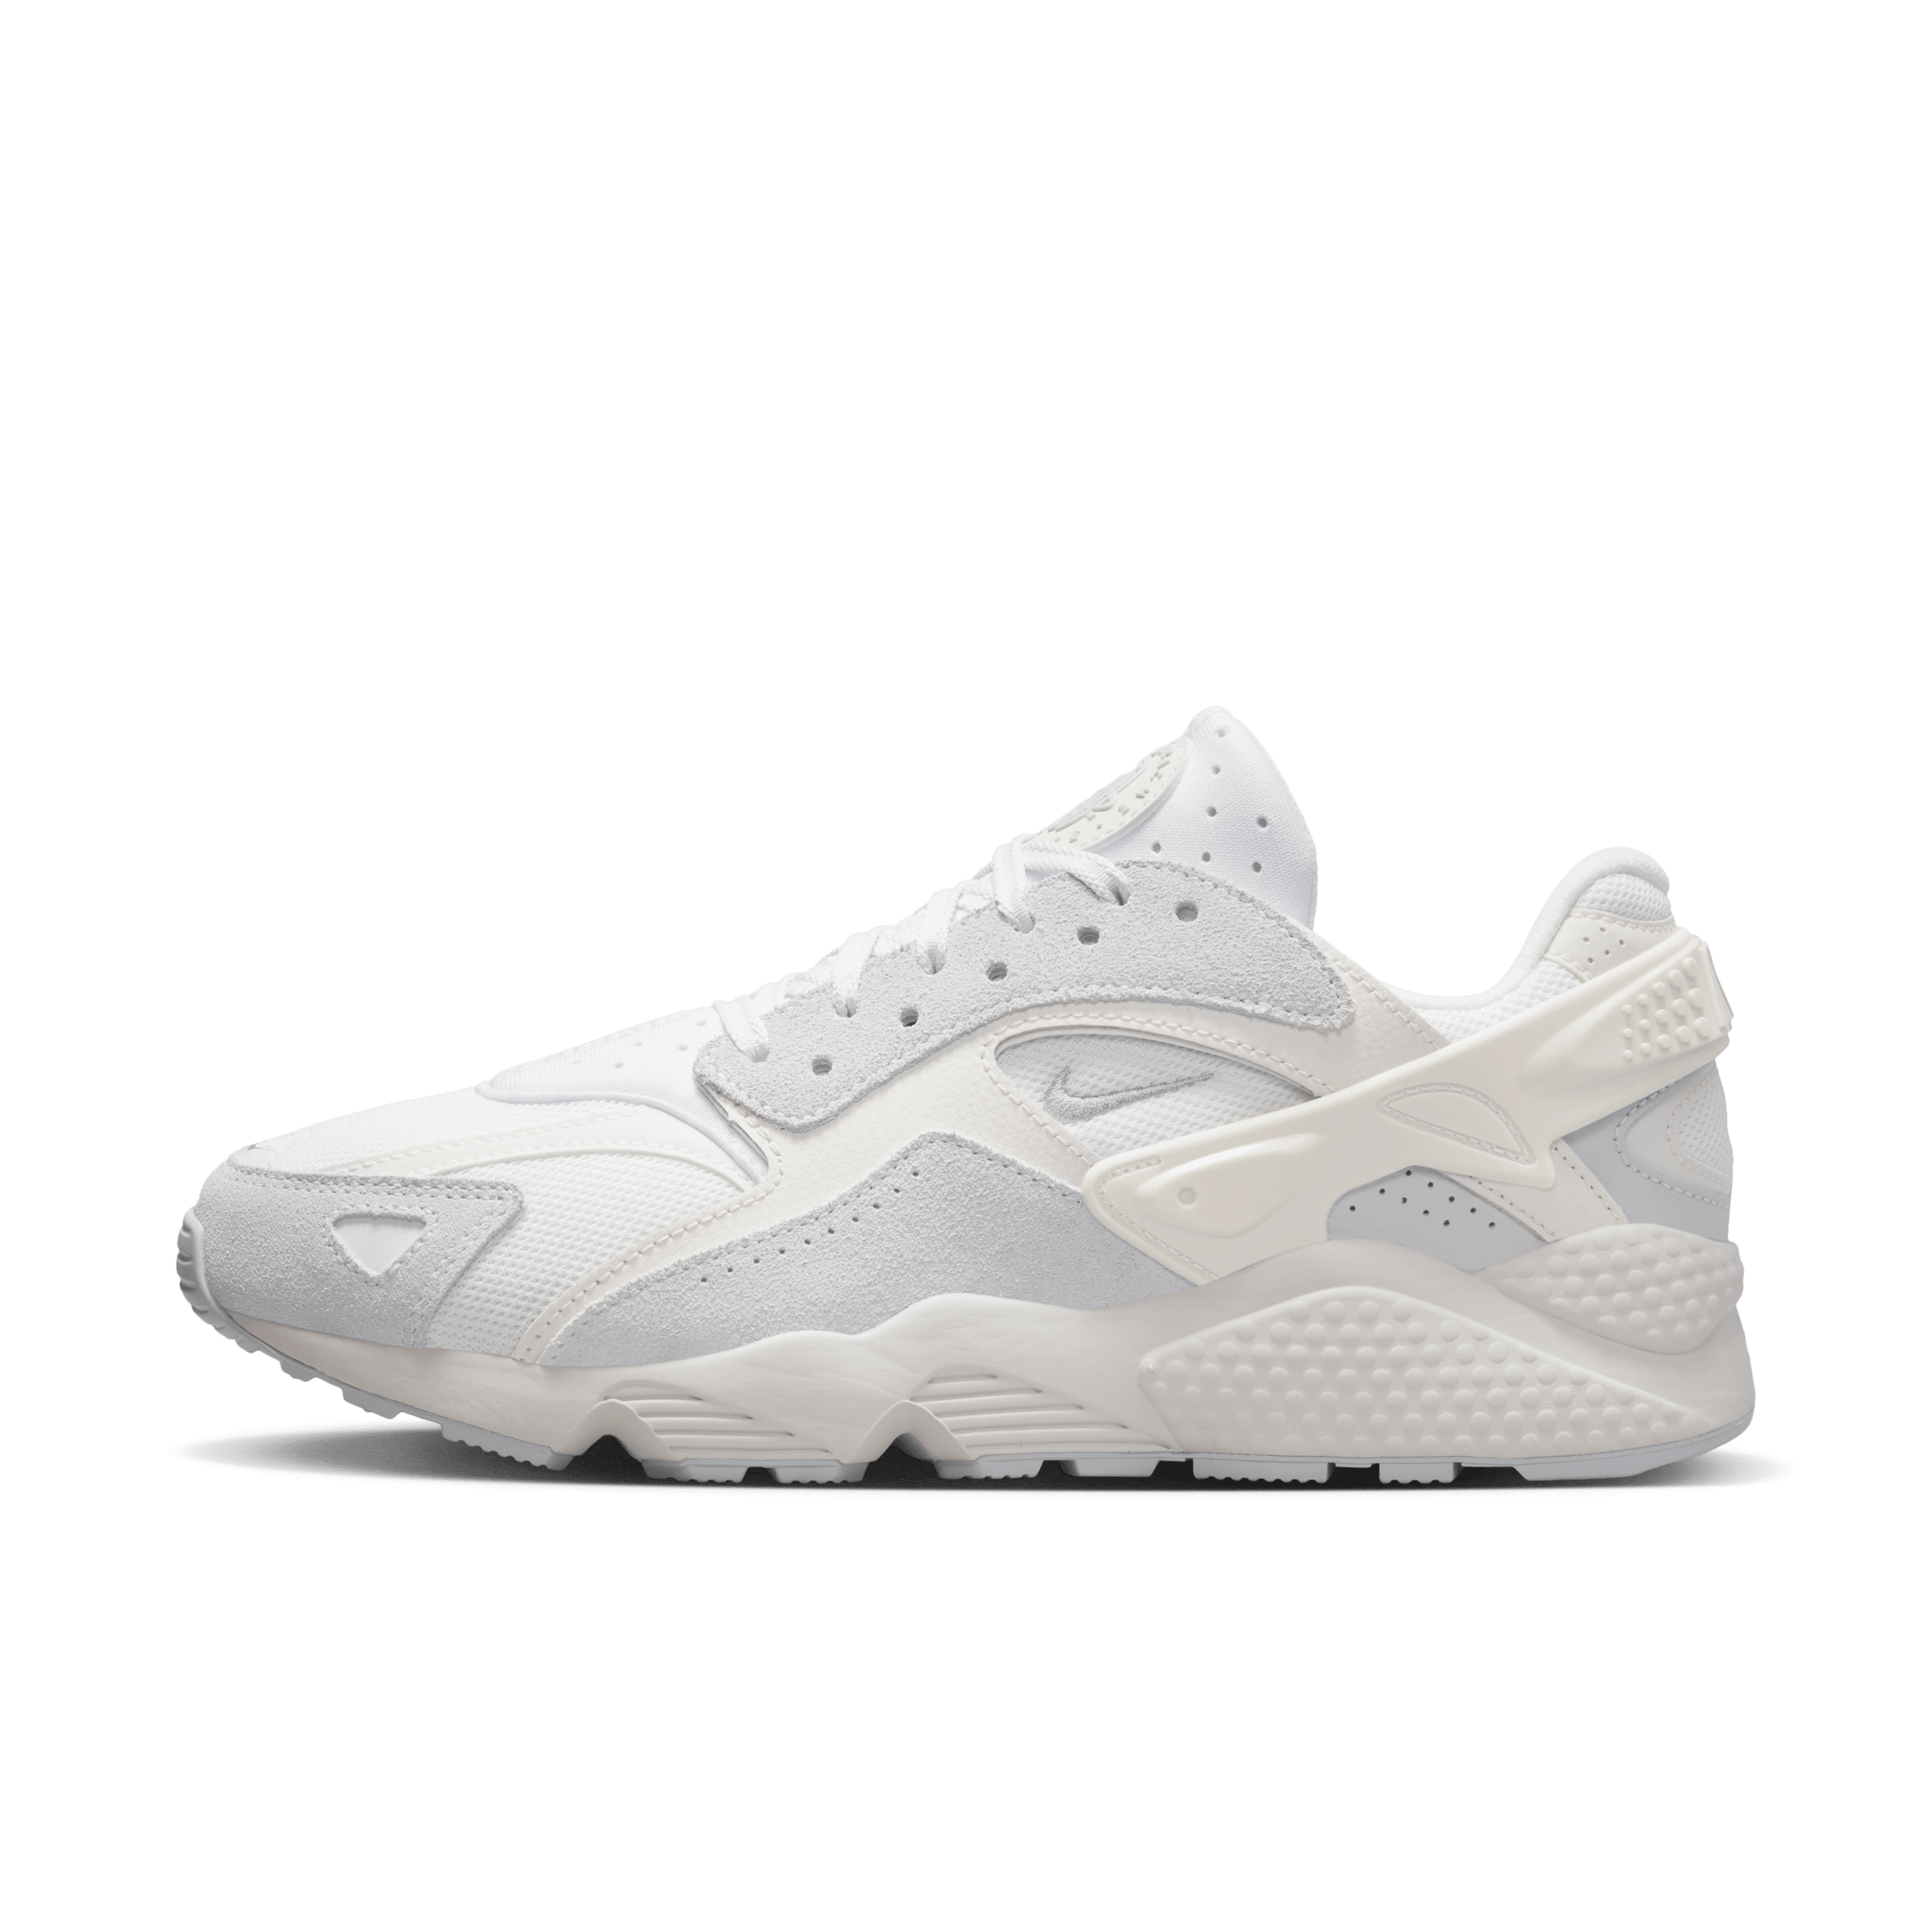 Nike Air Huarache Runner-sko til mænd - hvid